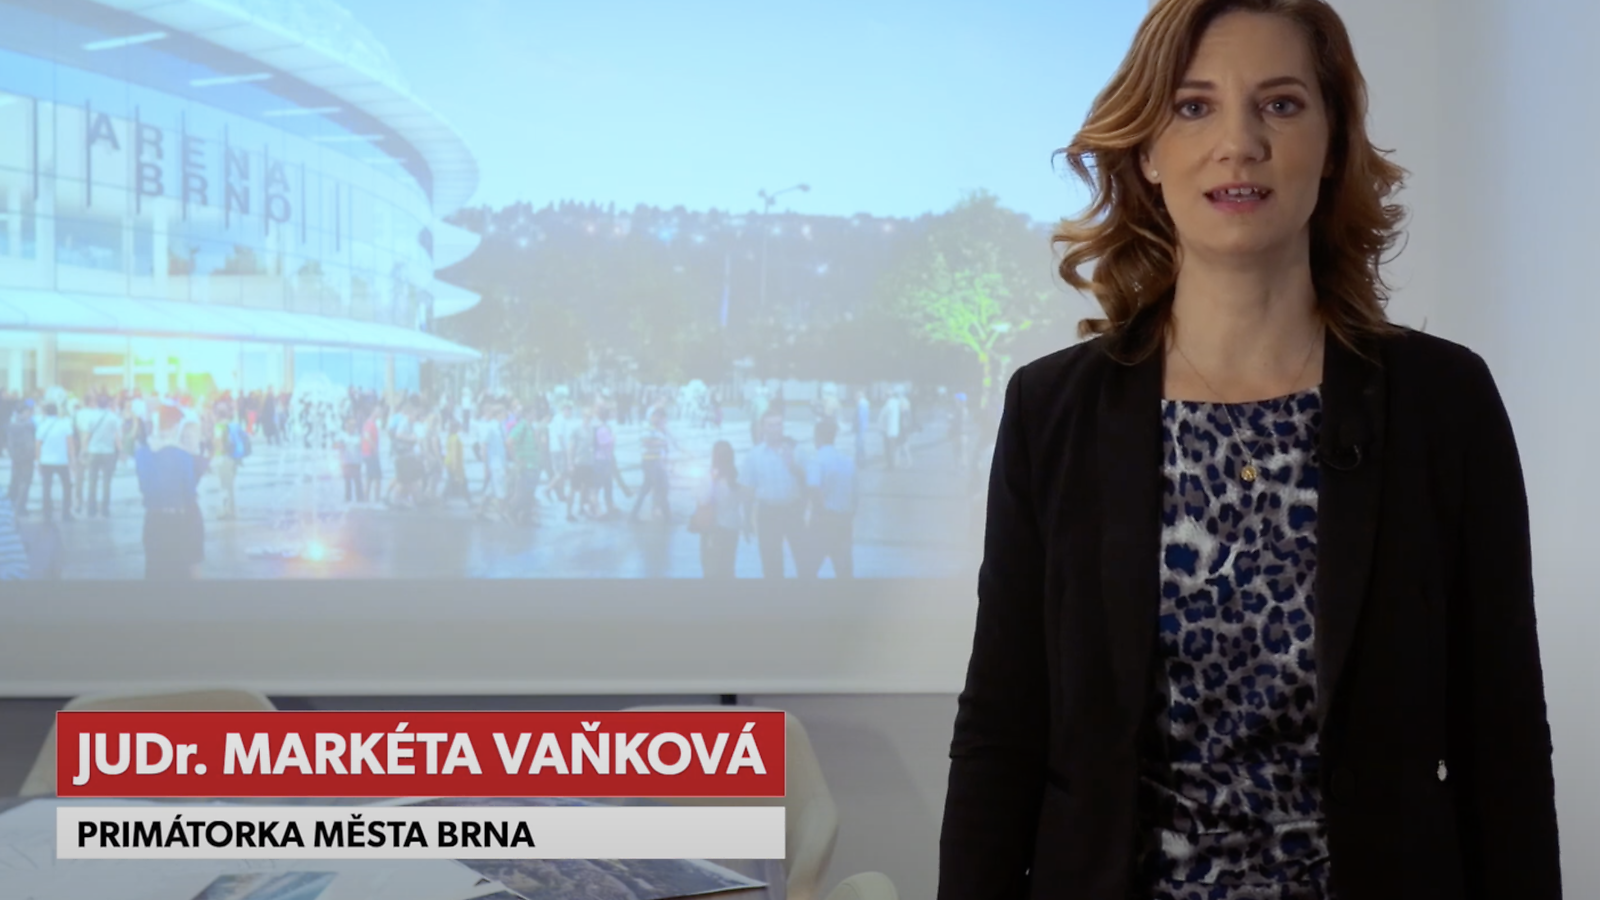 Vzkaz primátorky města Brna - Markéta Vaňková - Ambassador Team - ARENA BRNO